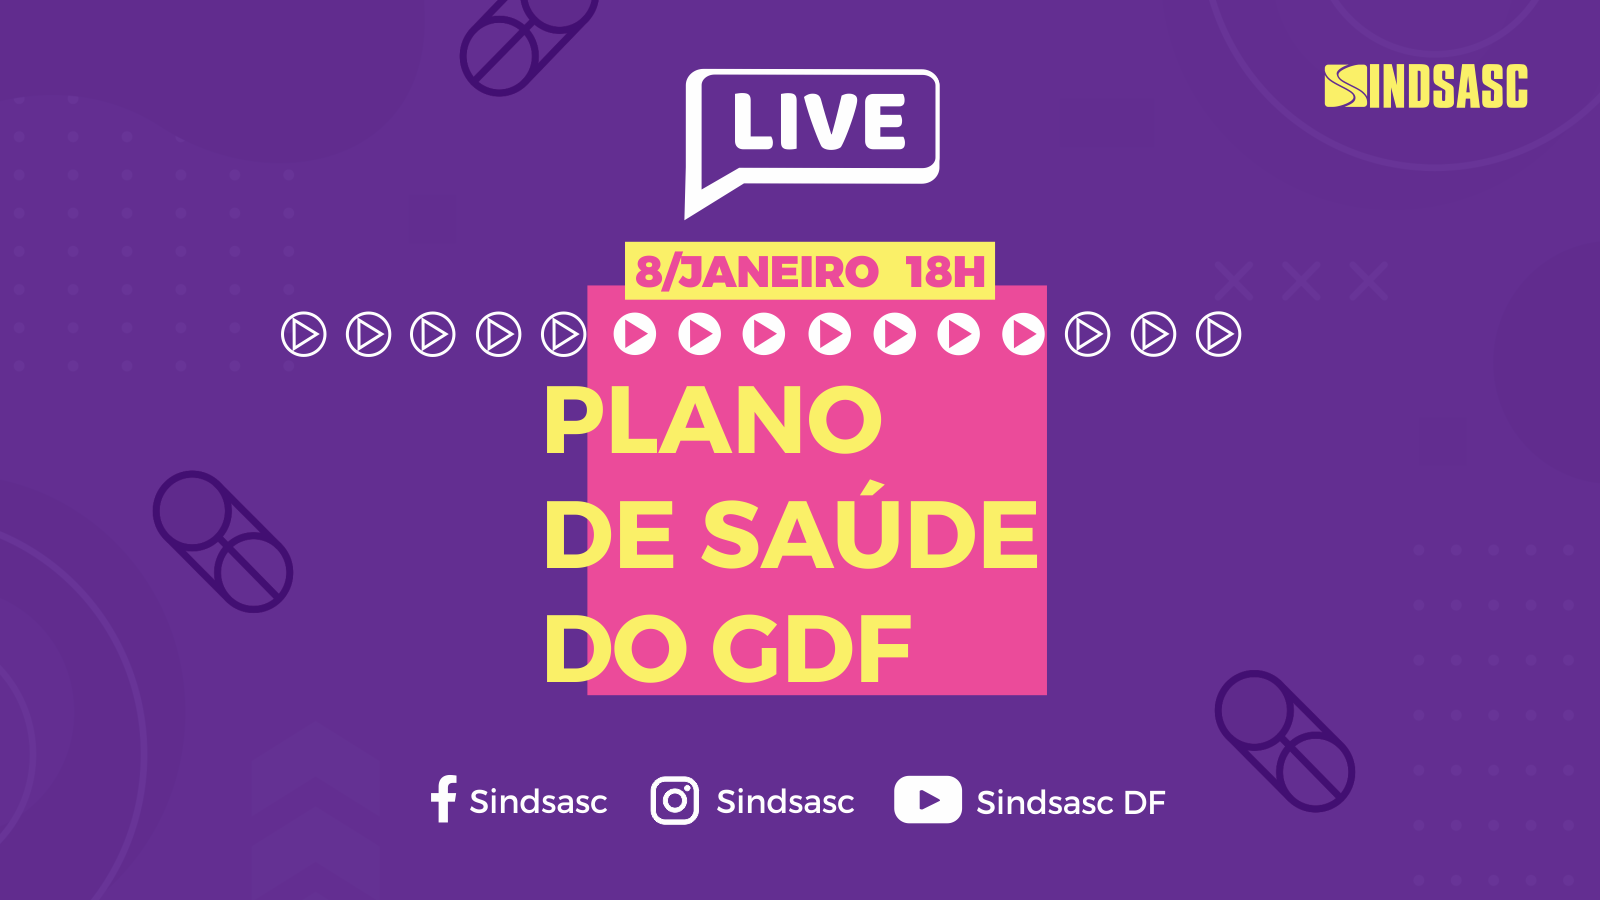 Sindsasc promove live para tirar dúvidas sobre plano de saúde do GDF